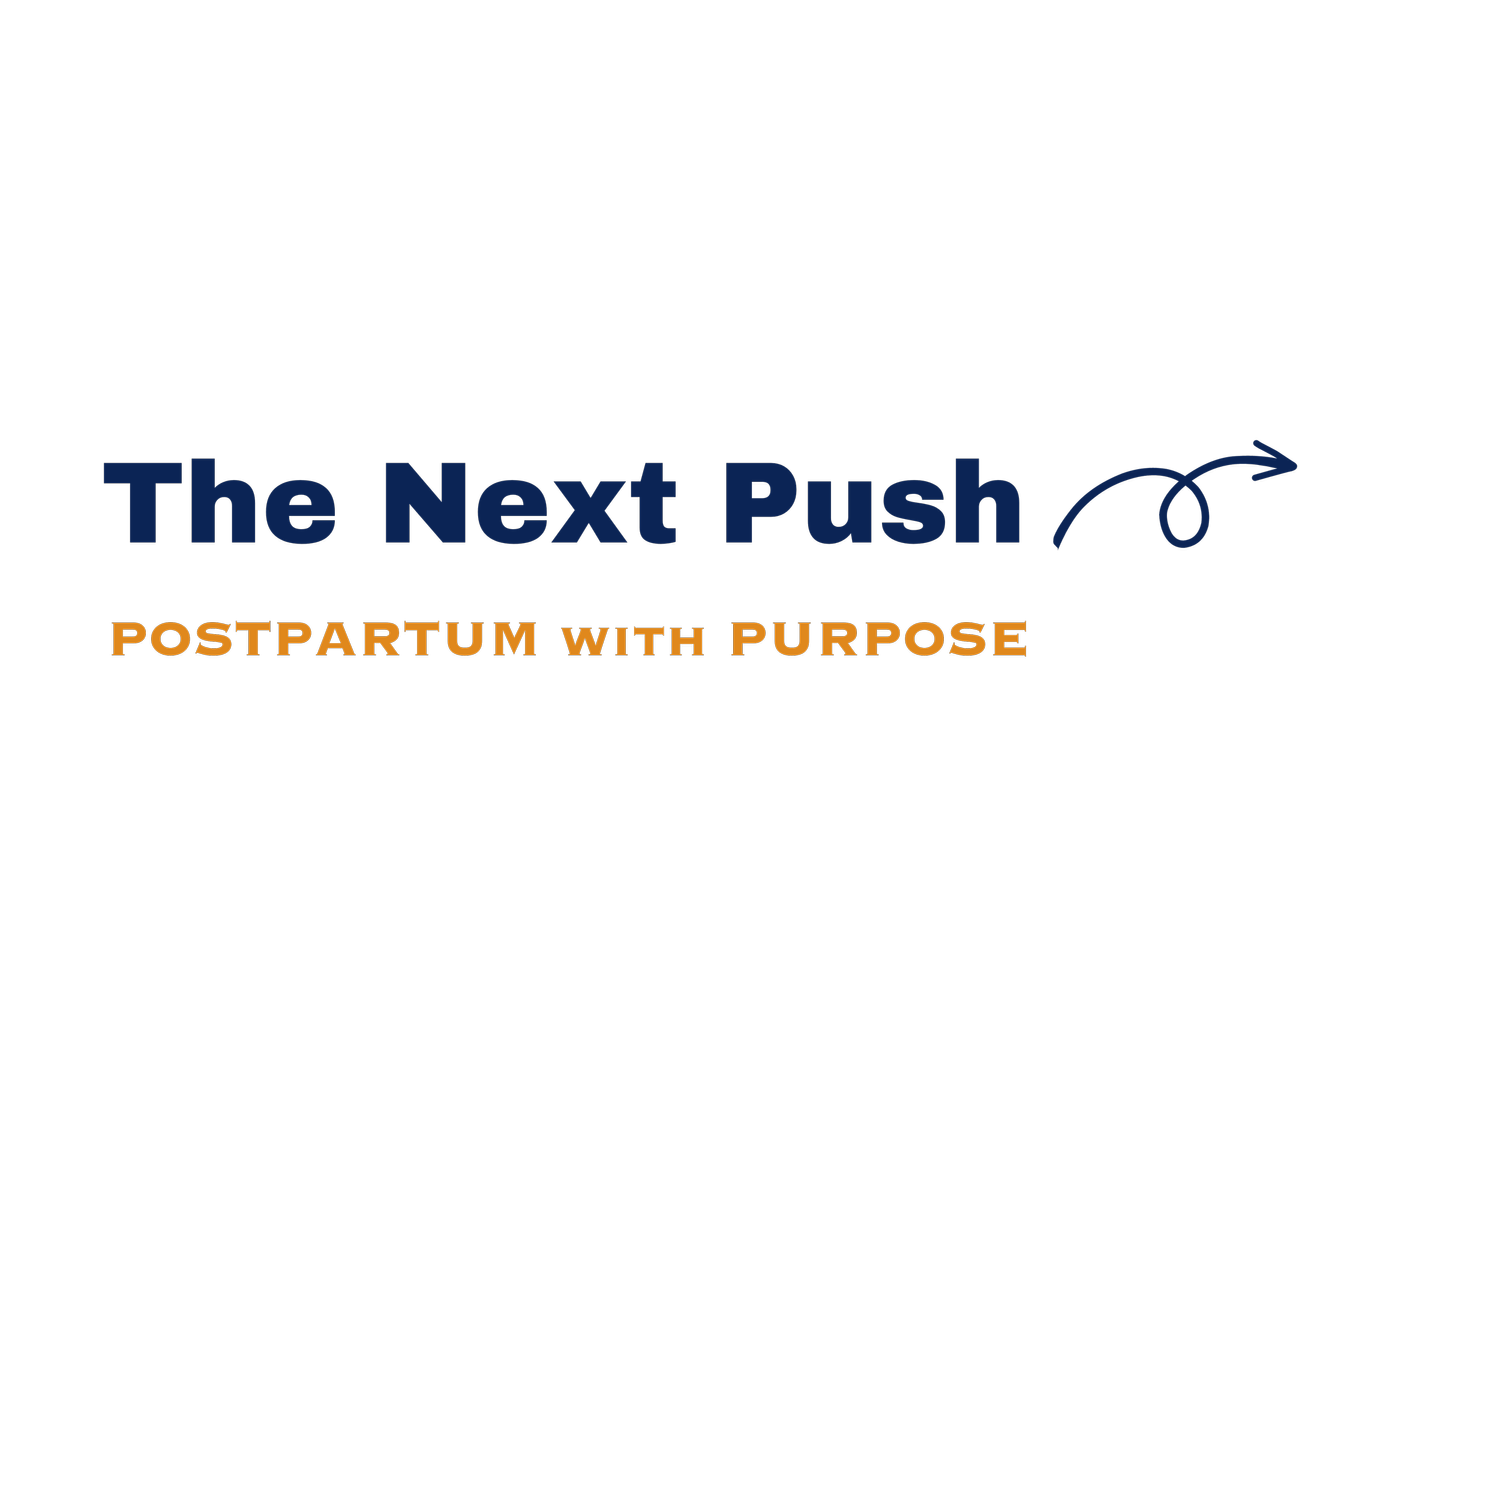 The Next Push